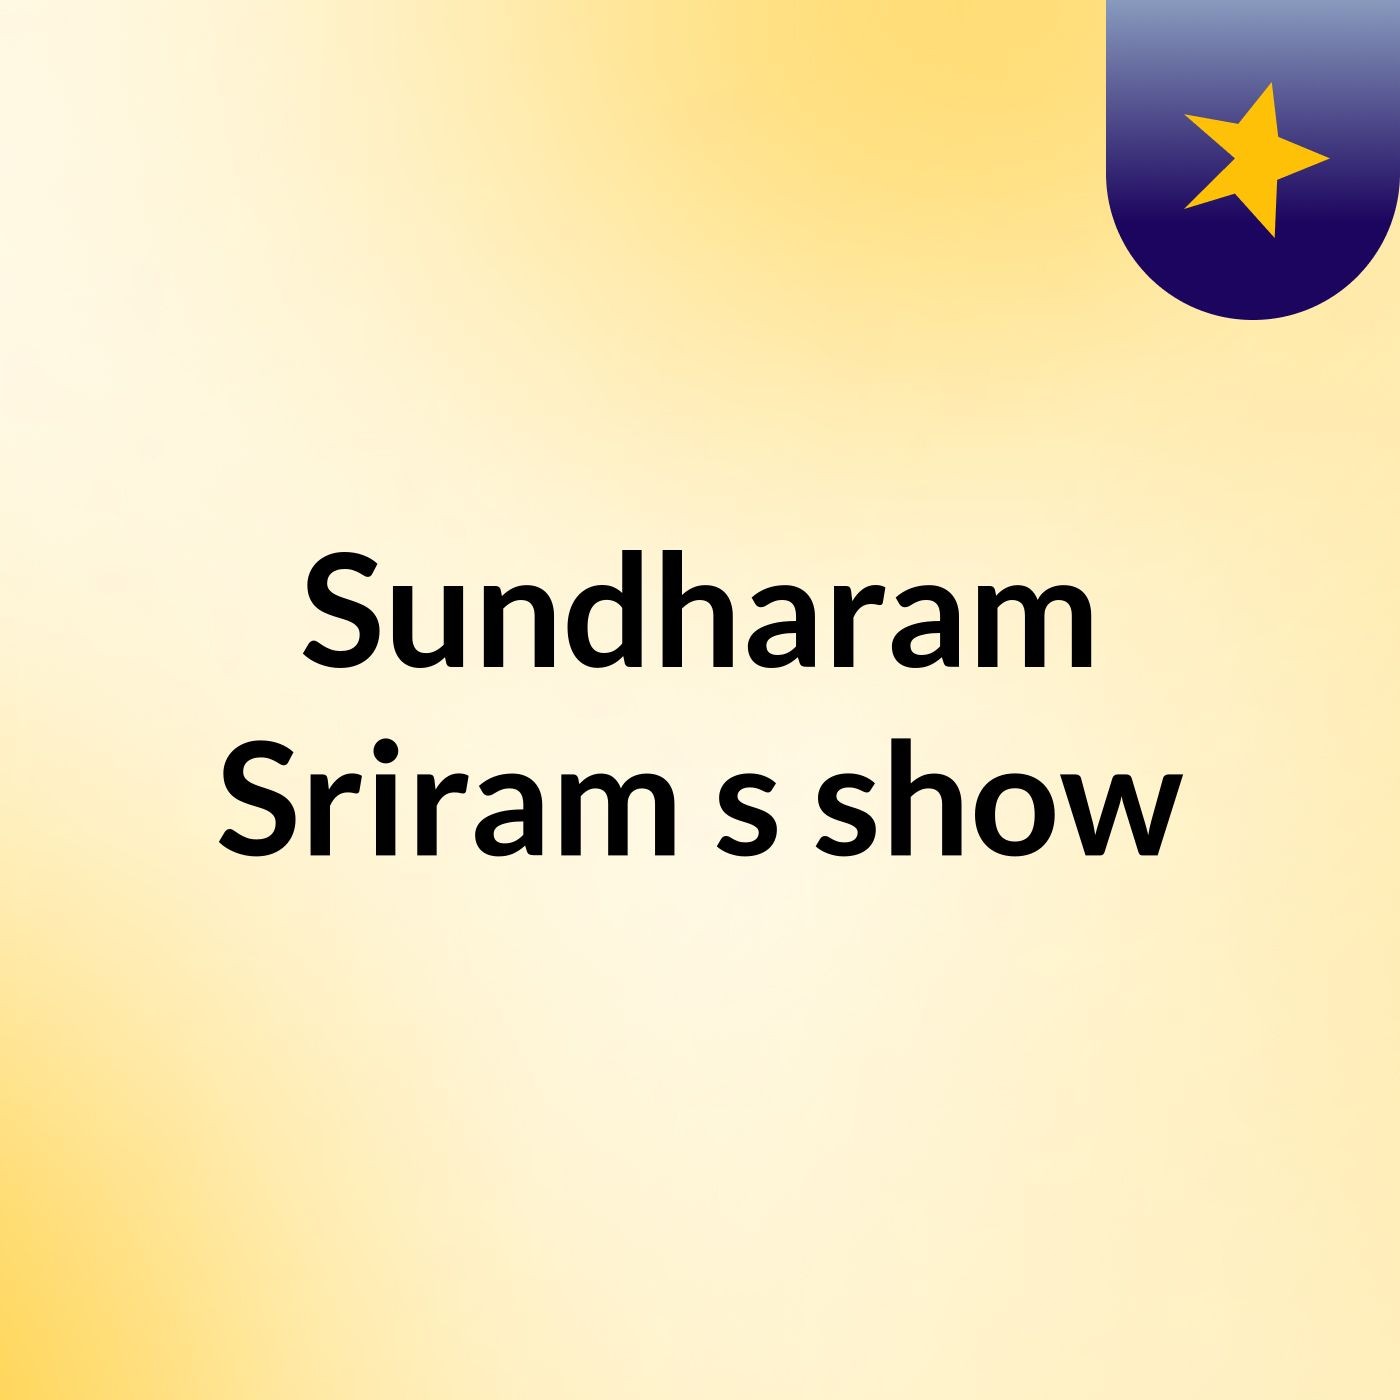 Sundharam Sriram's show